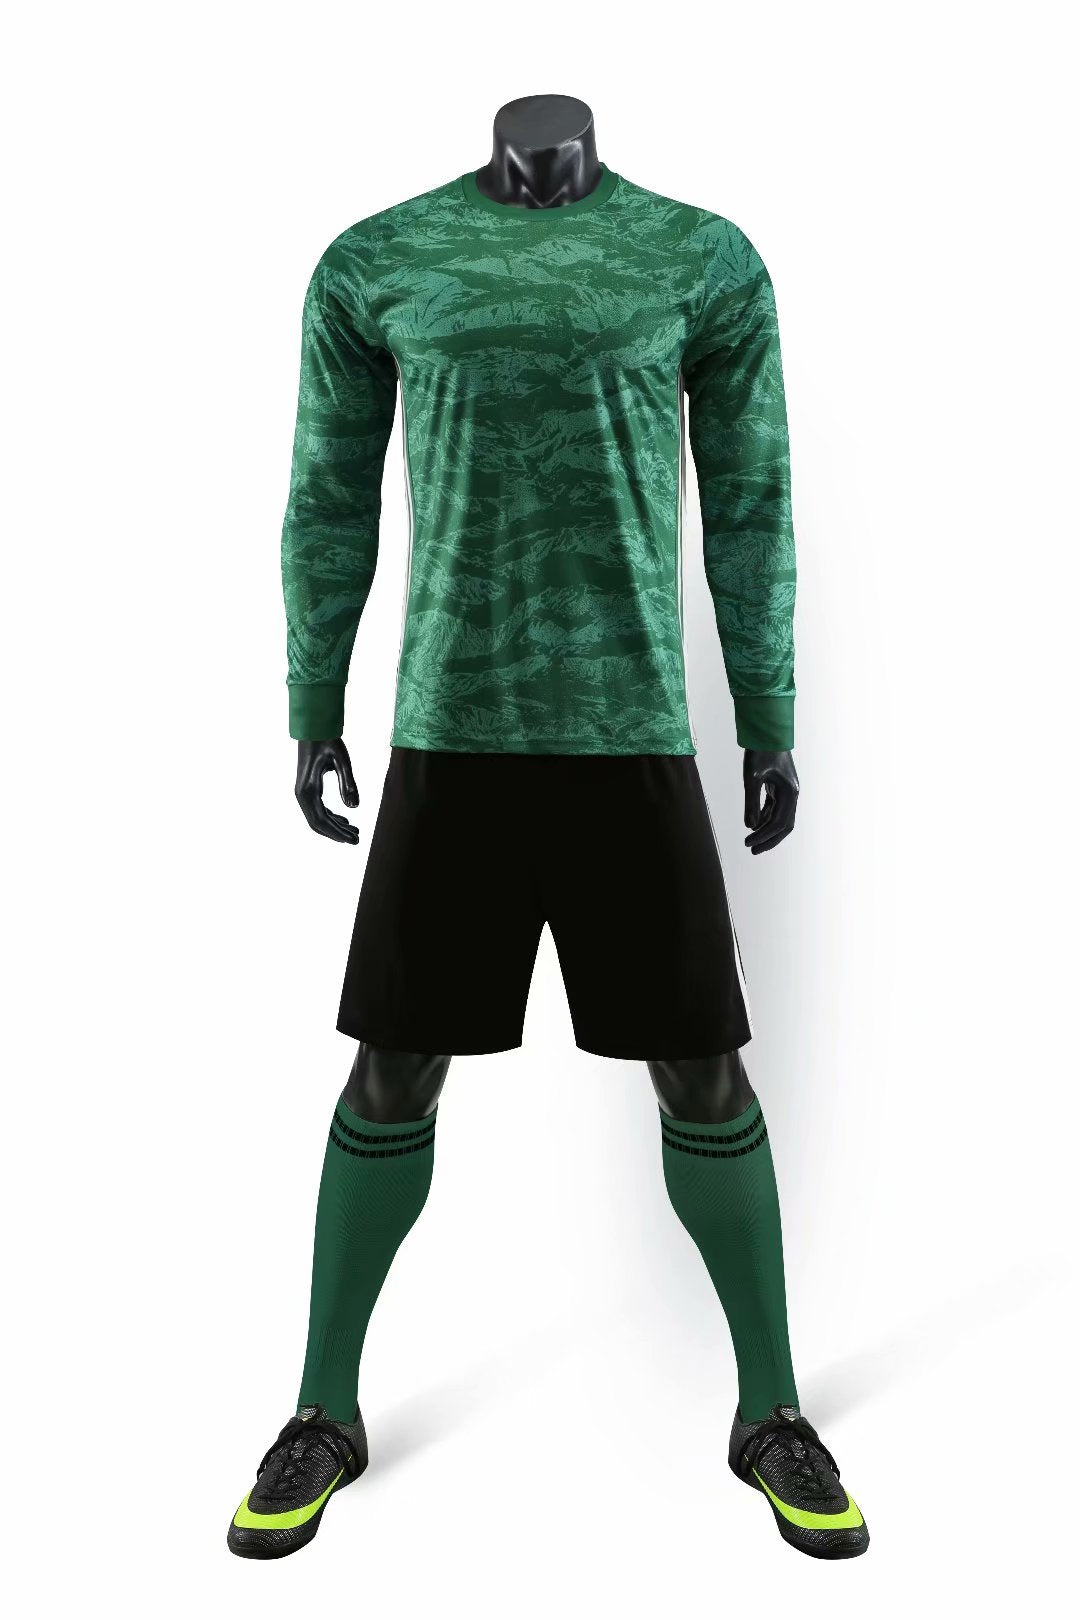 football jersey green colour